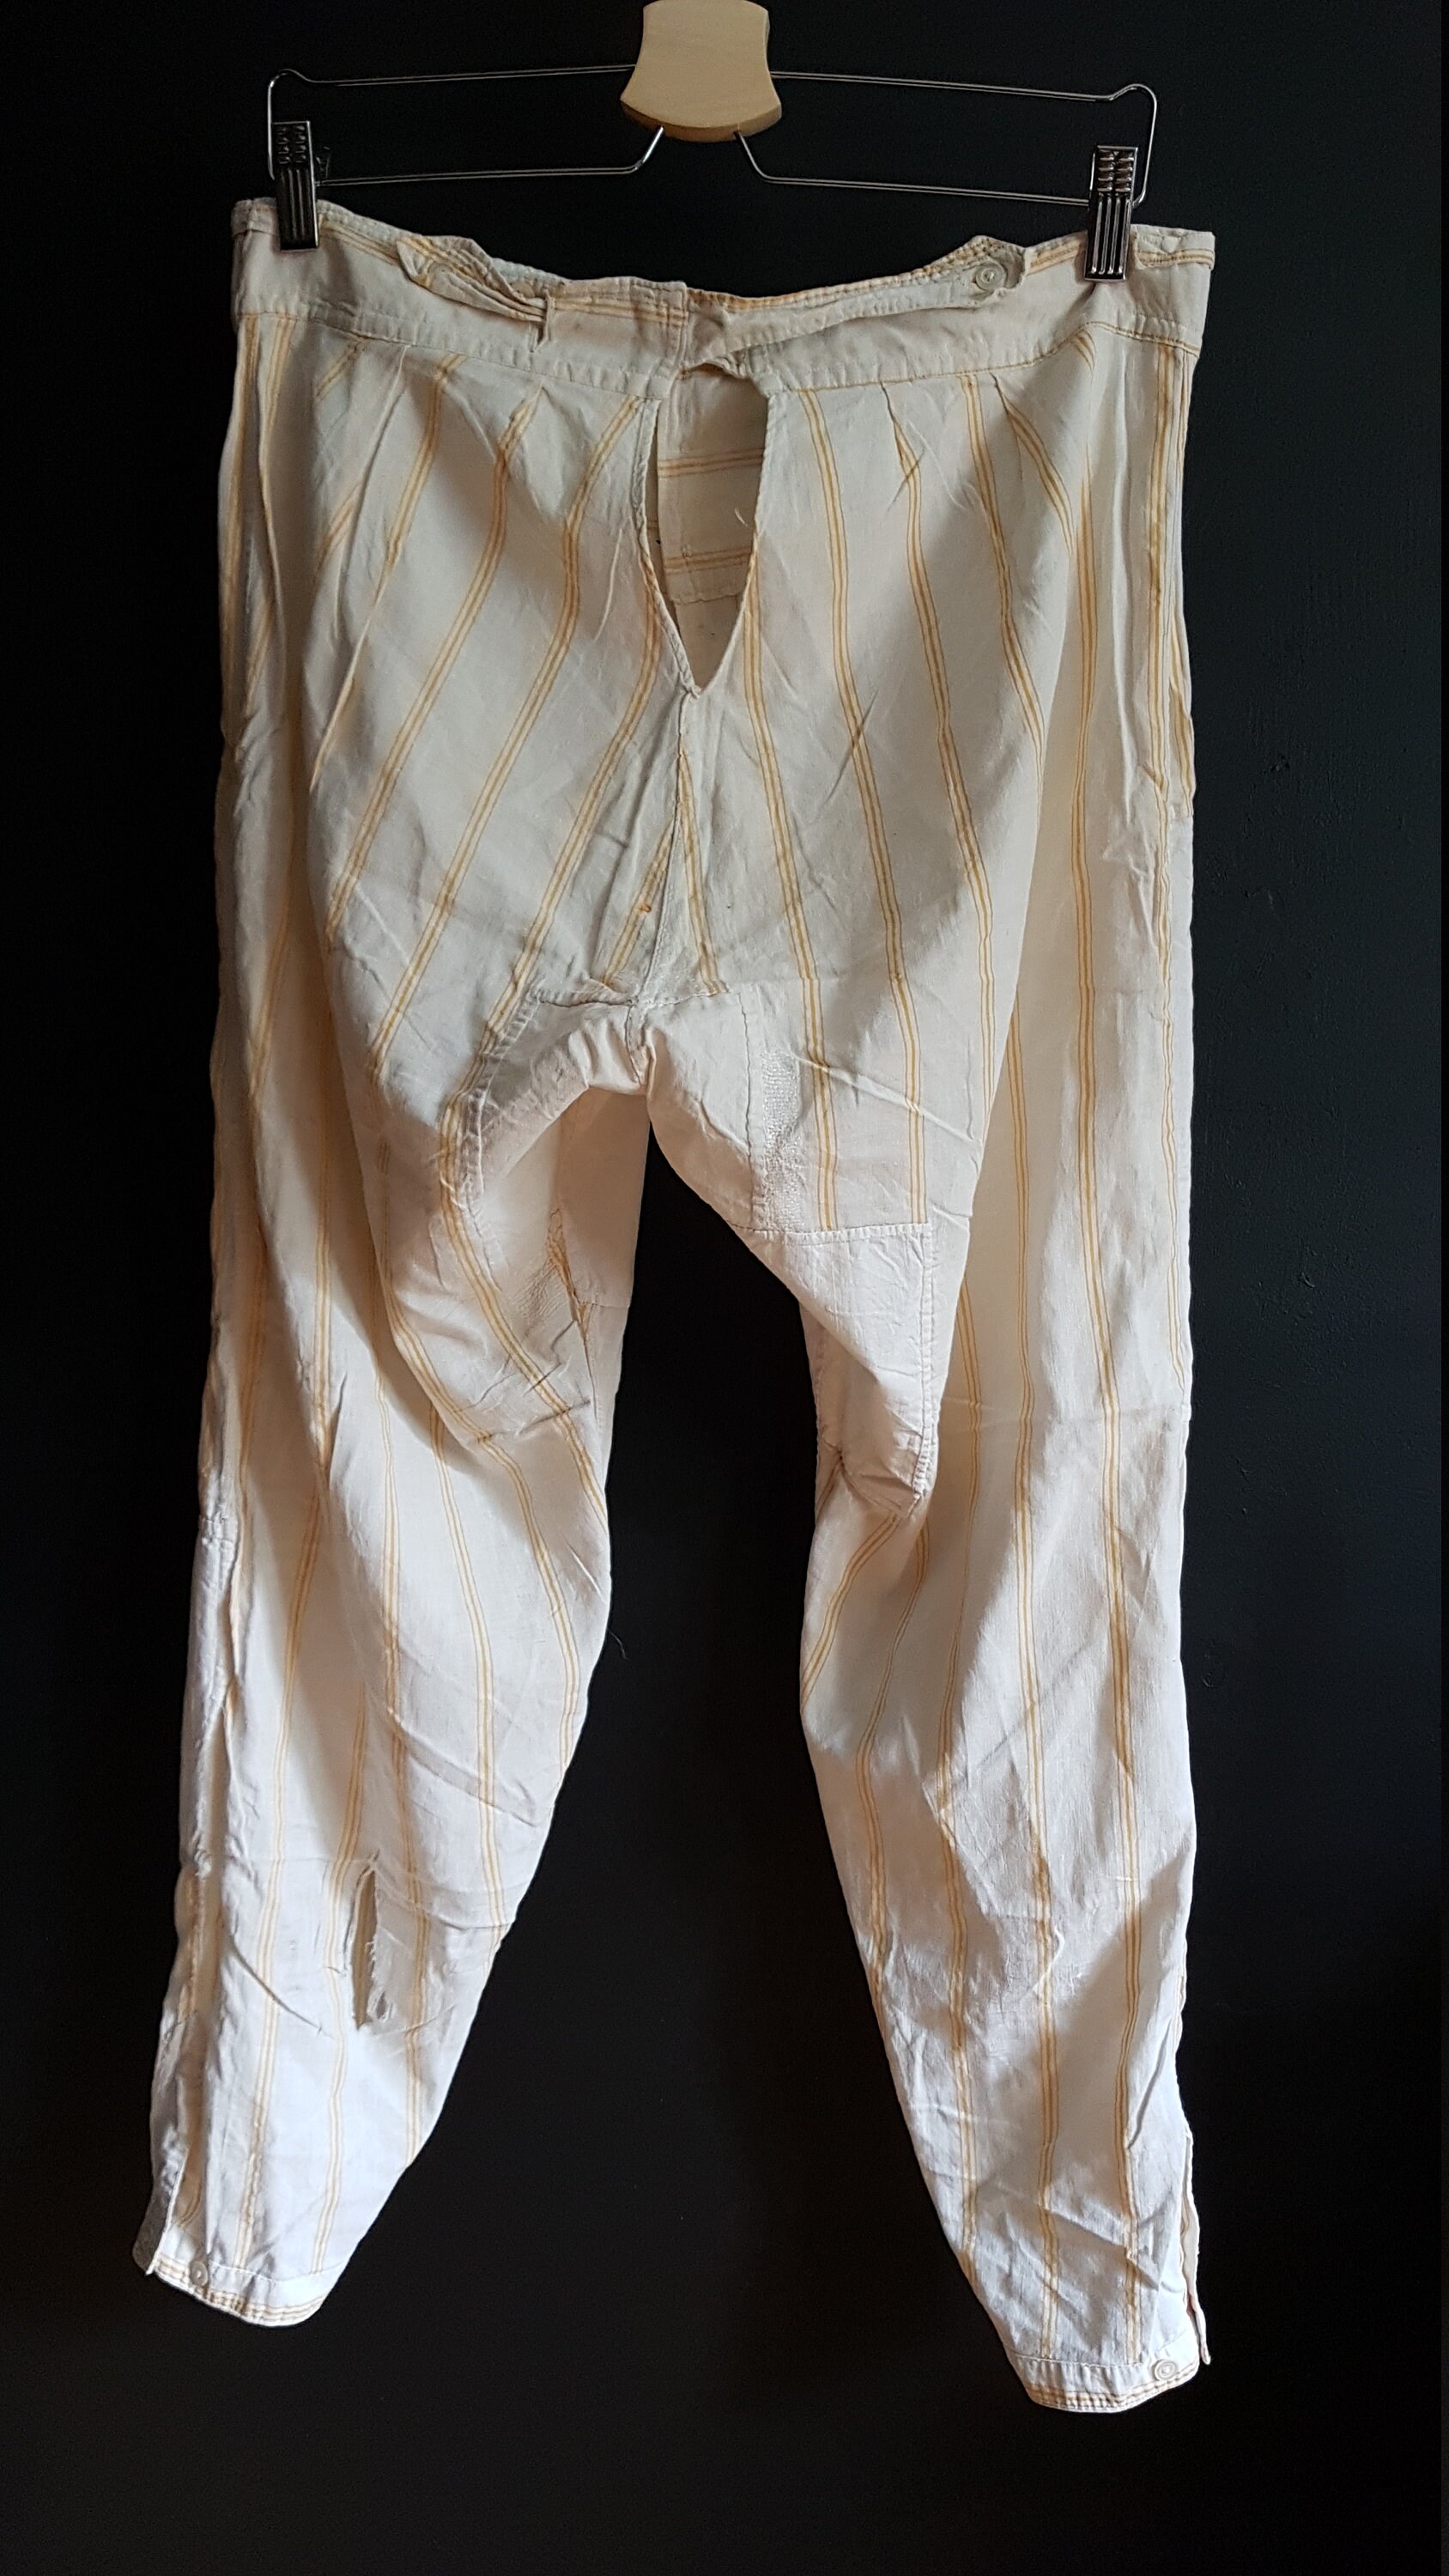 Antique Mens Linen Drawers Underwear Breeches Full Length